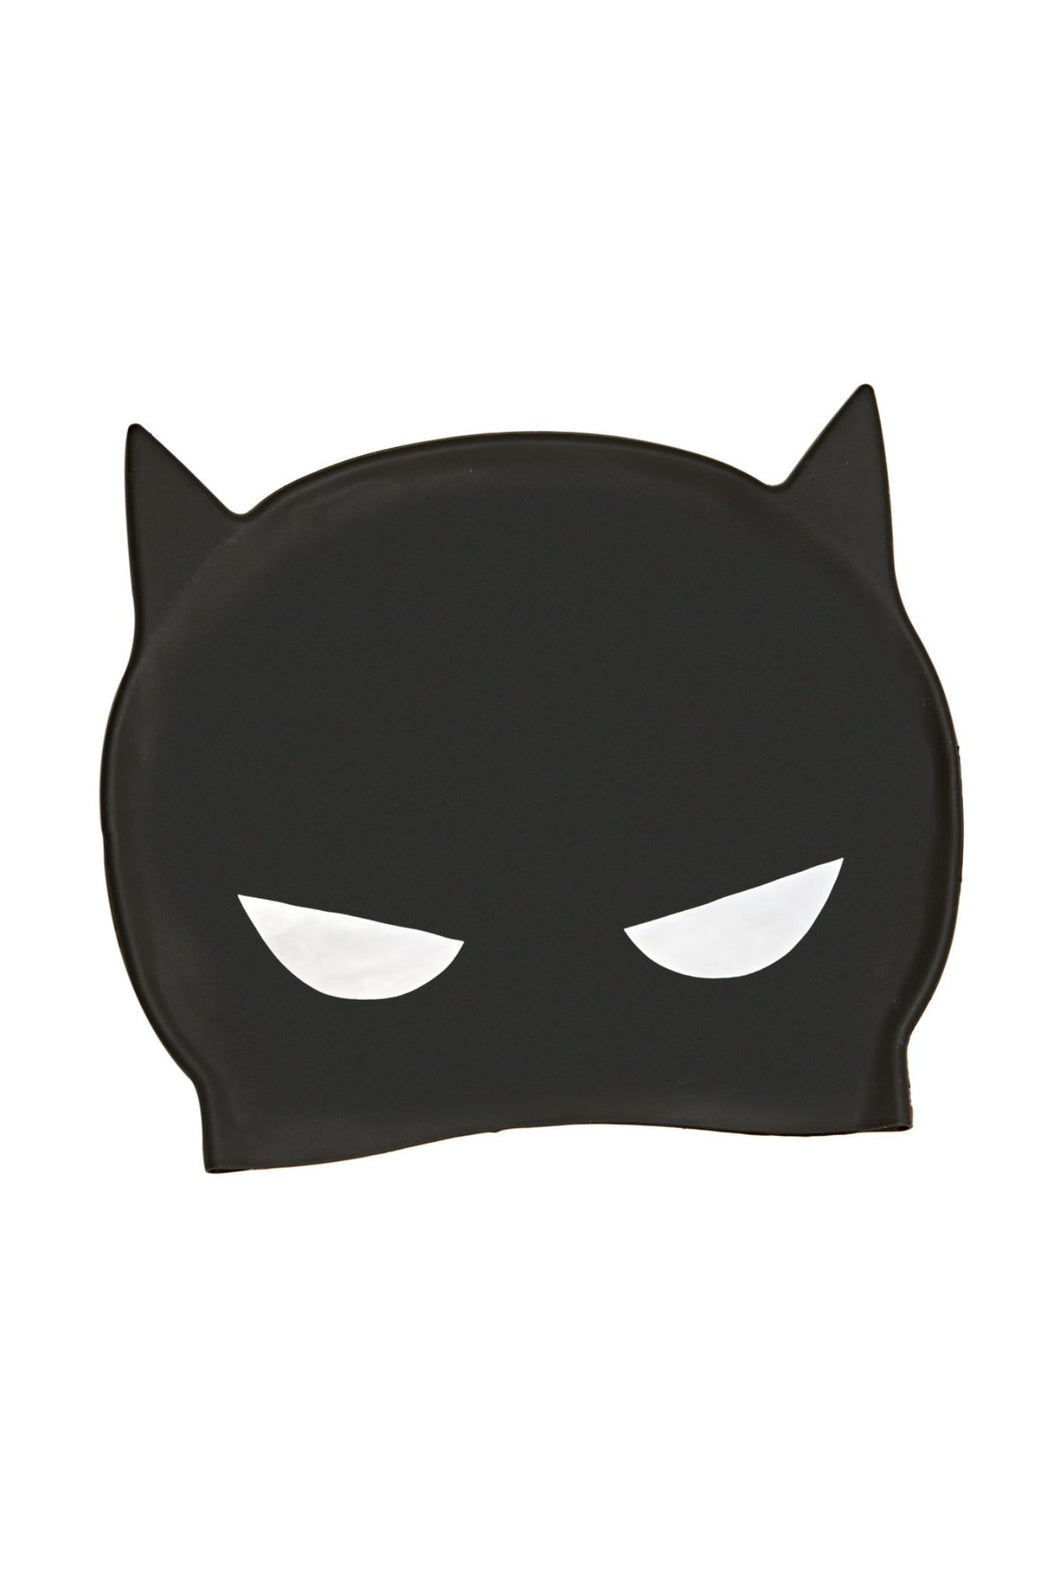 Buy Zoggs Batman Junior 3D Silicone Cap Online in Malaysia | Mothercare ?